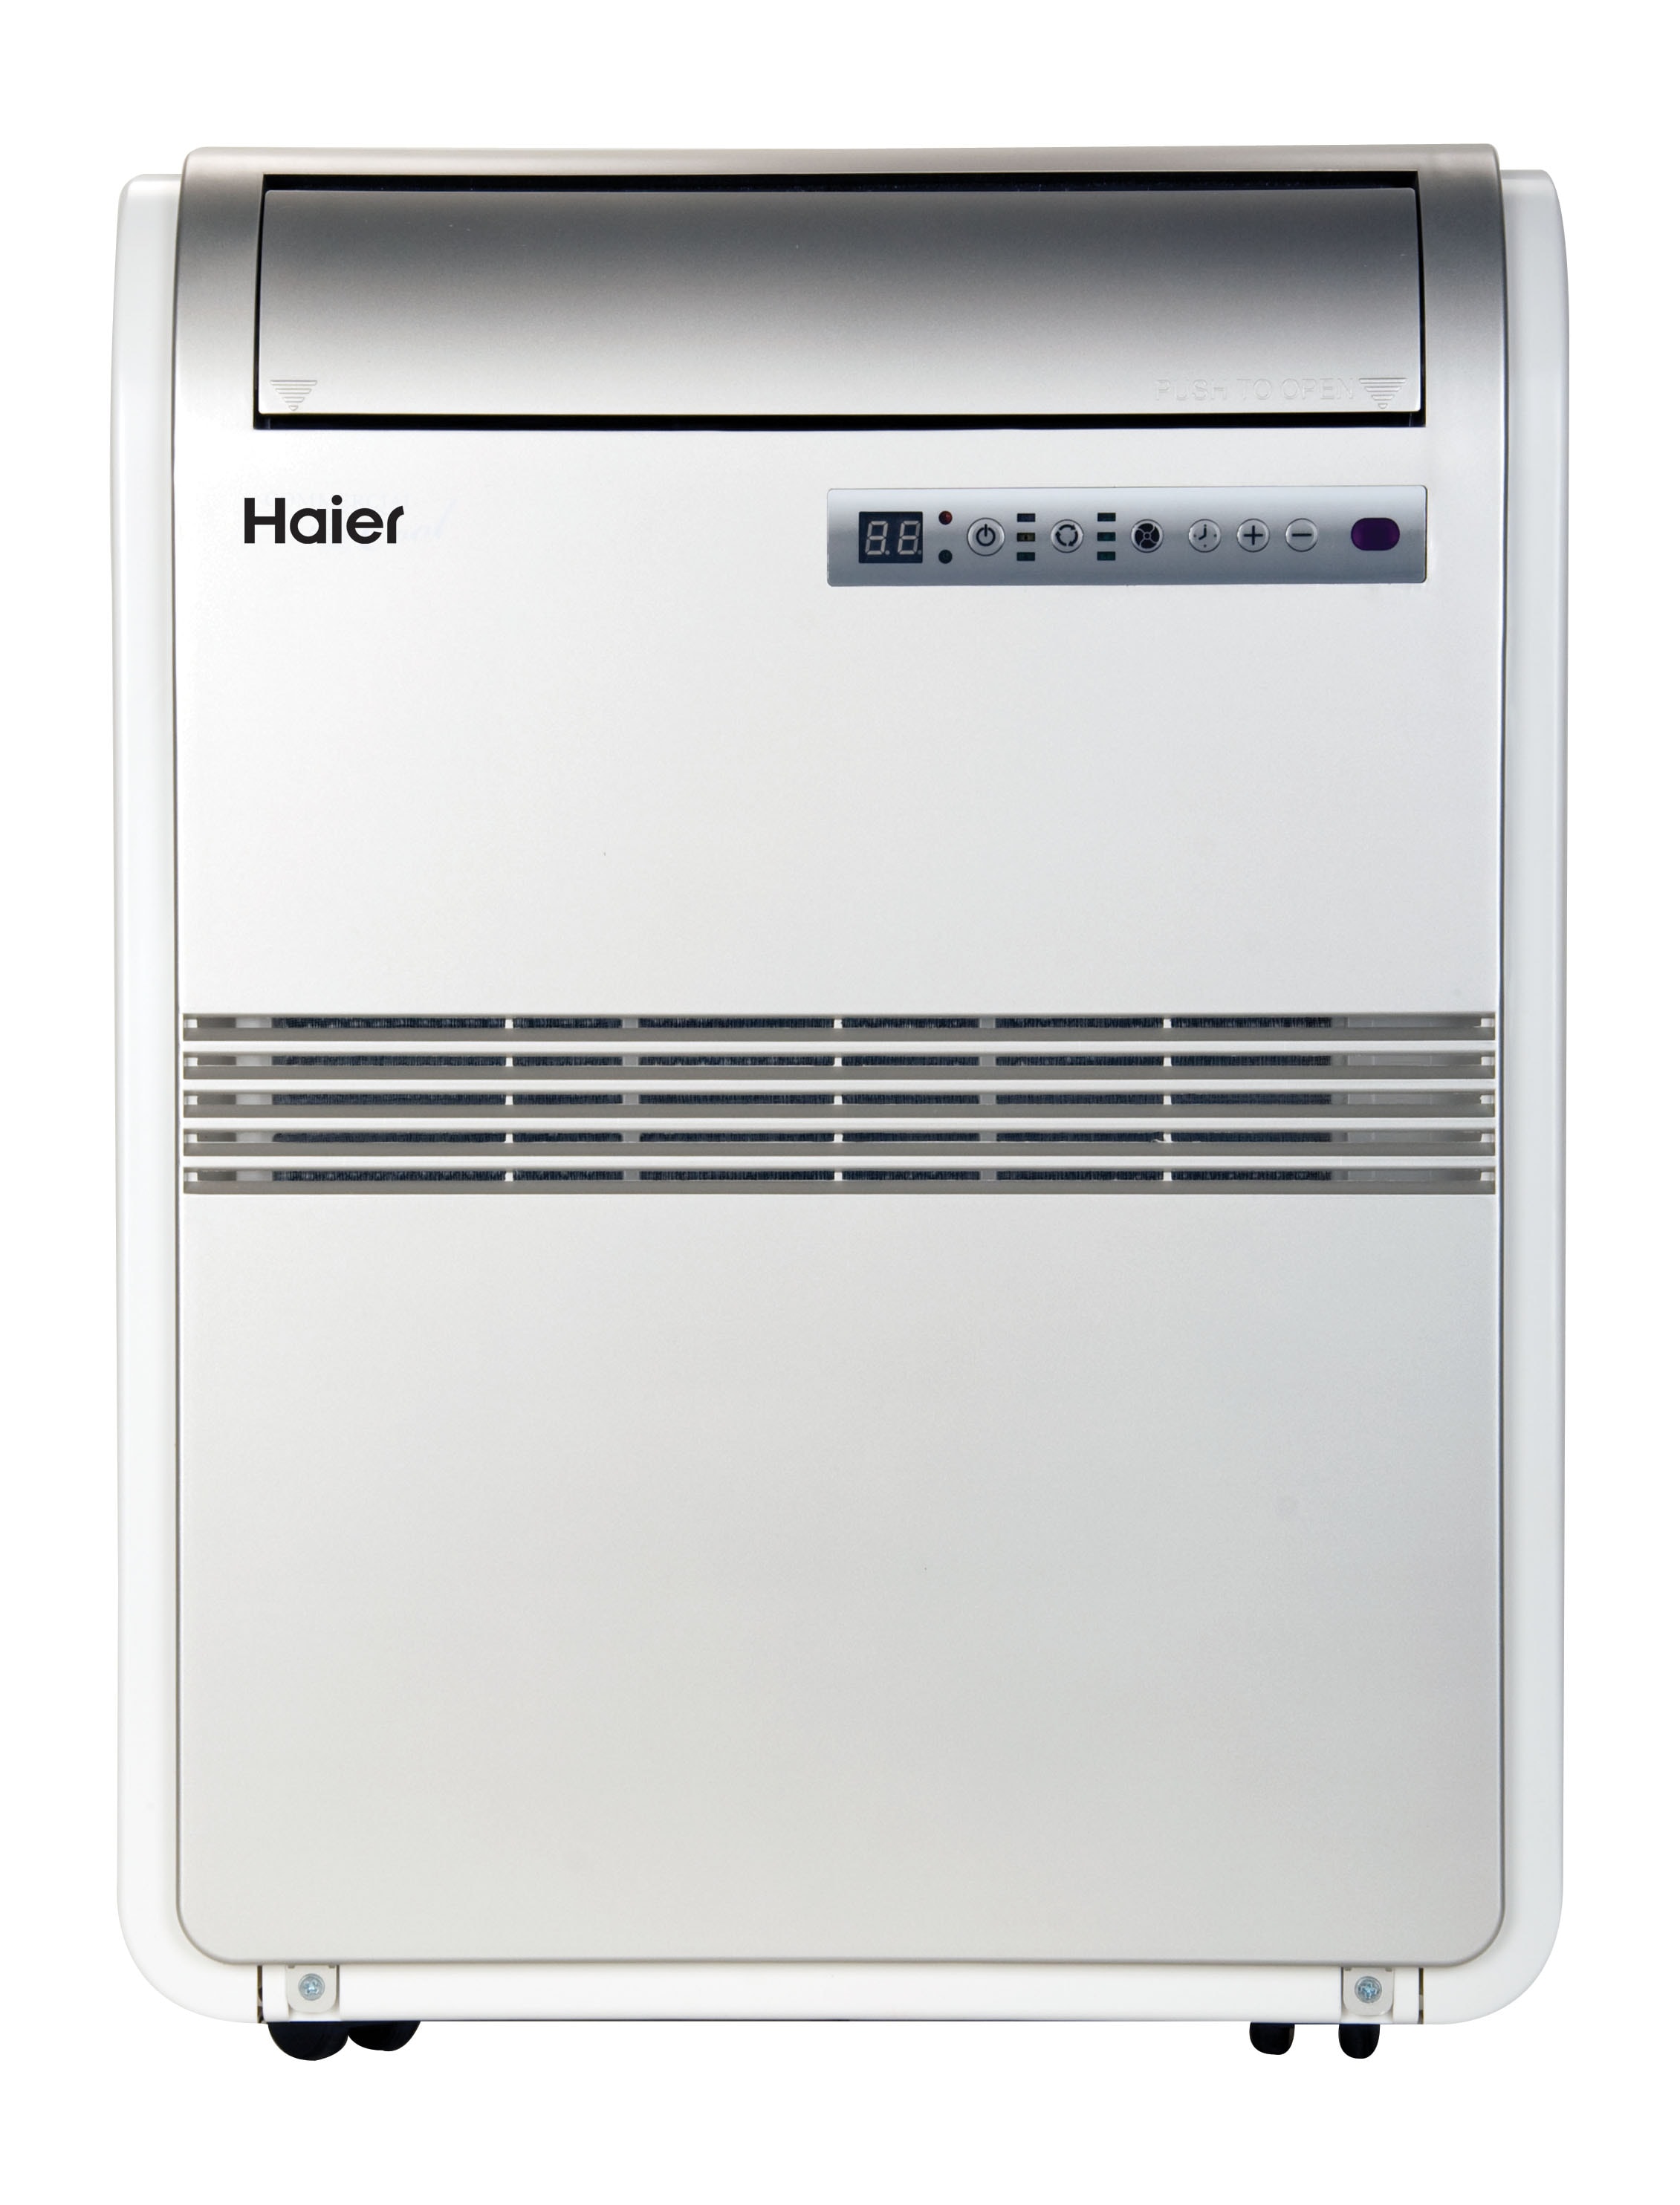 Haier -BTU DOE (115-Volt) Portable Air Conditioner Cools 250-sq ft at